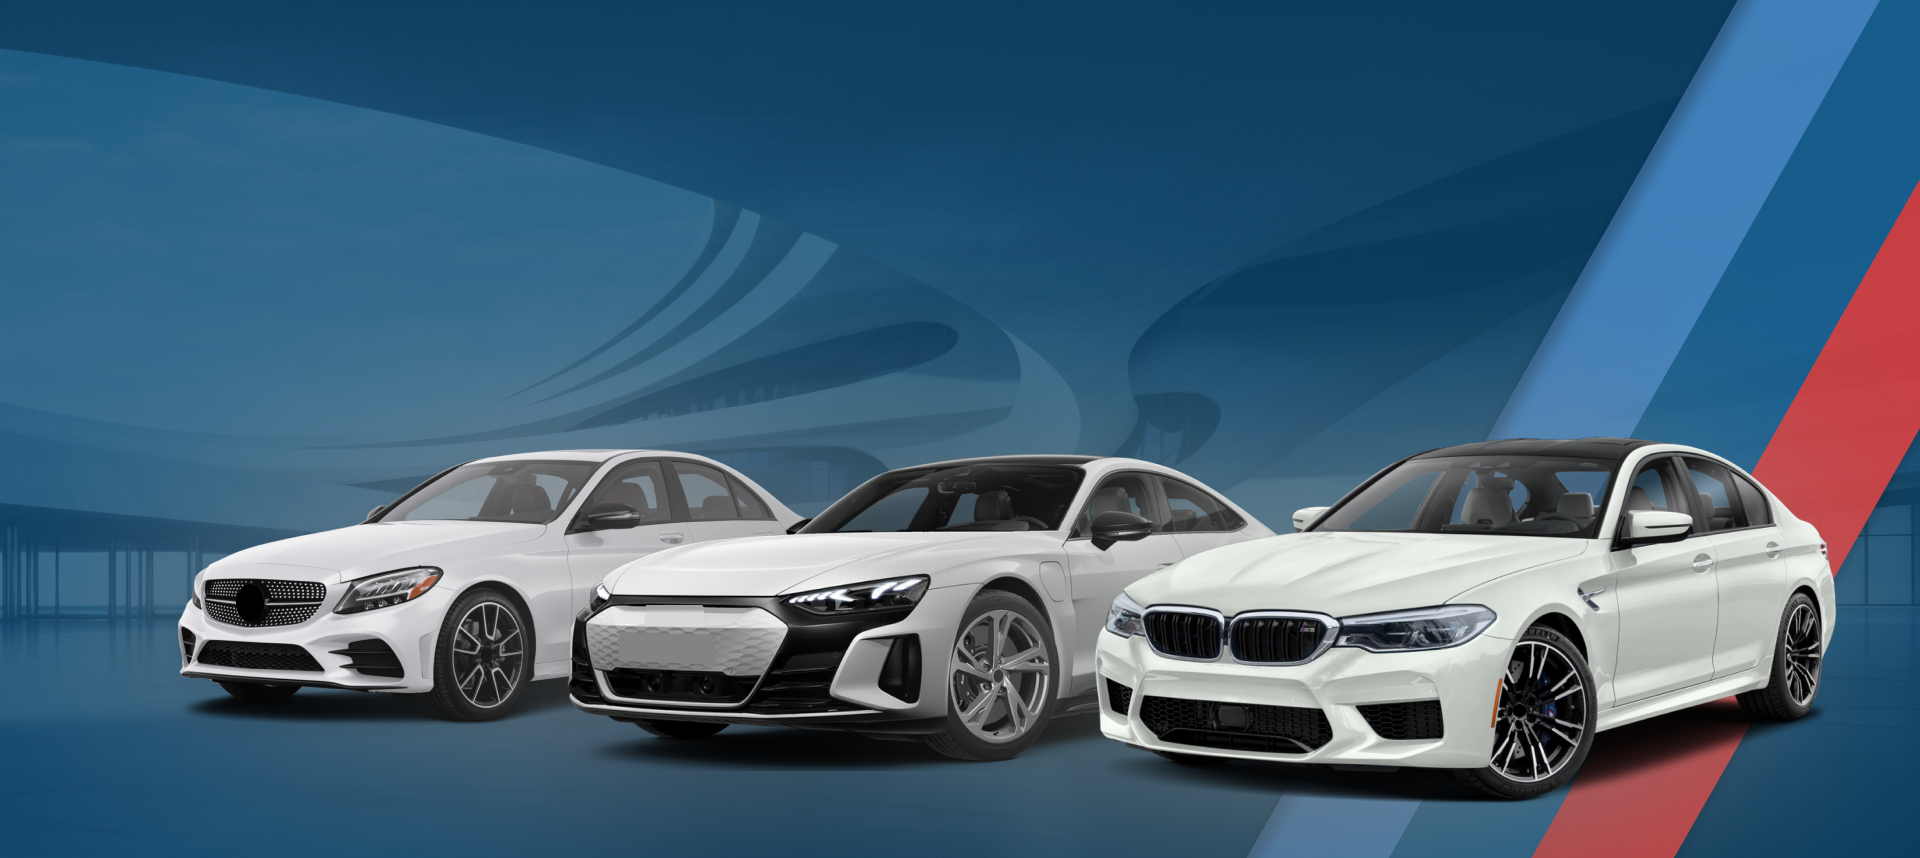 Vehicles Background Image | Bertinis German Motors